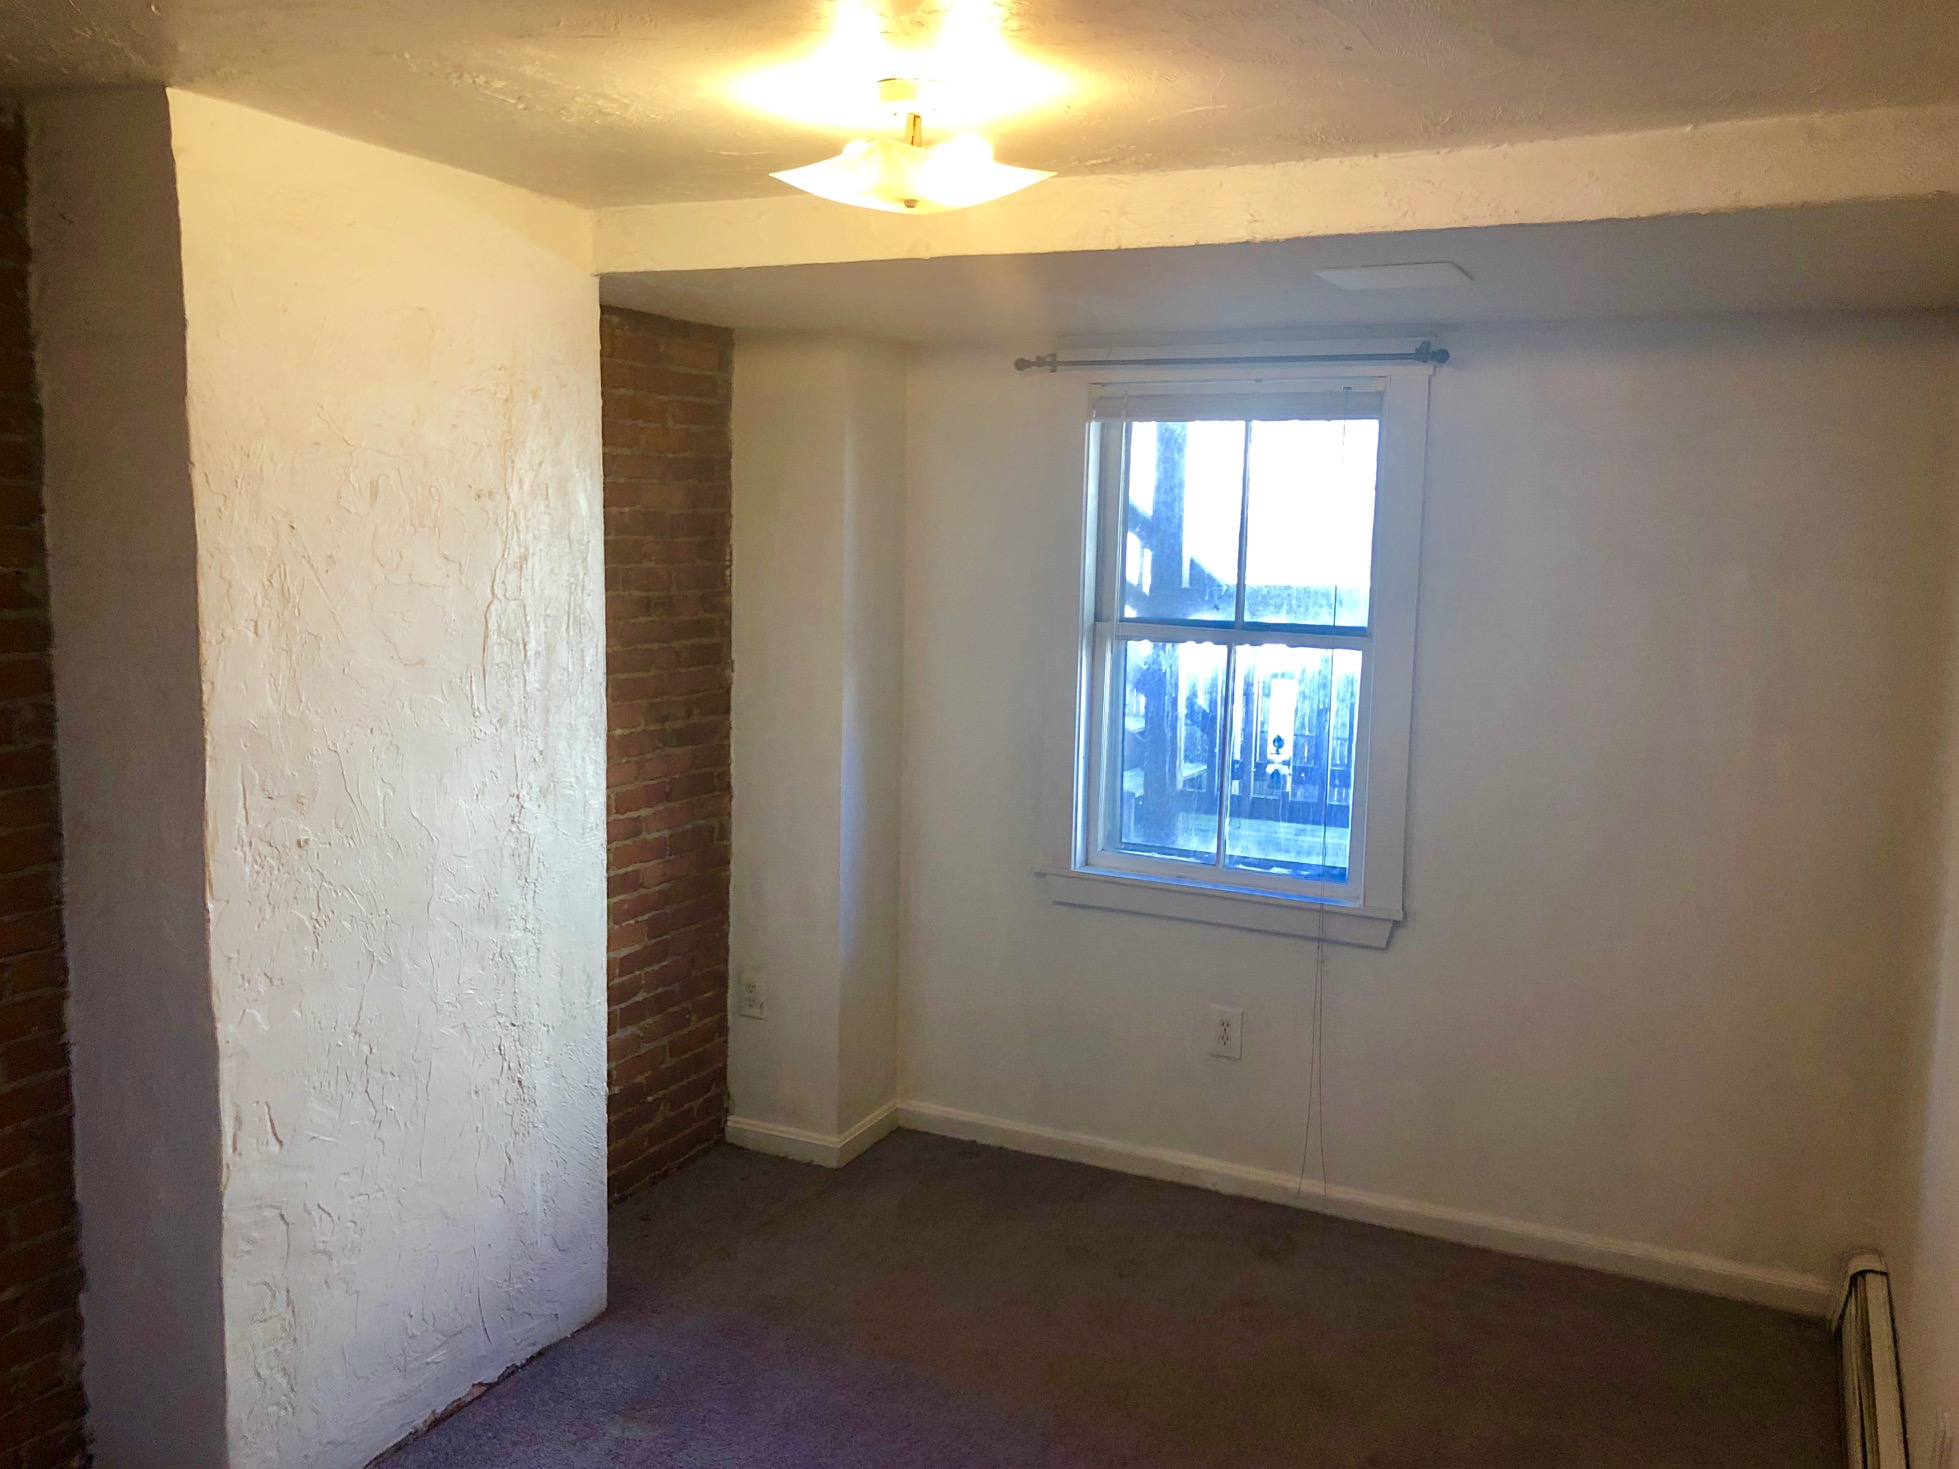 Photos of apartment on Murdock St.,Boston MA 02135